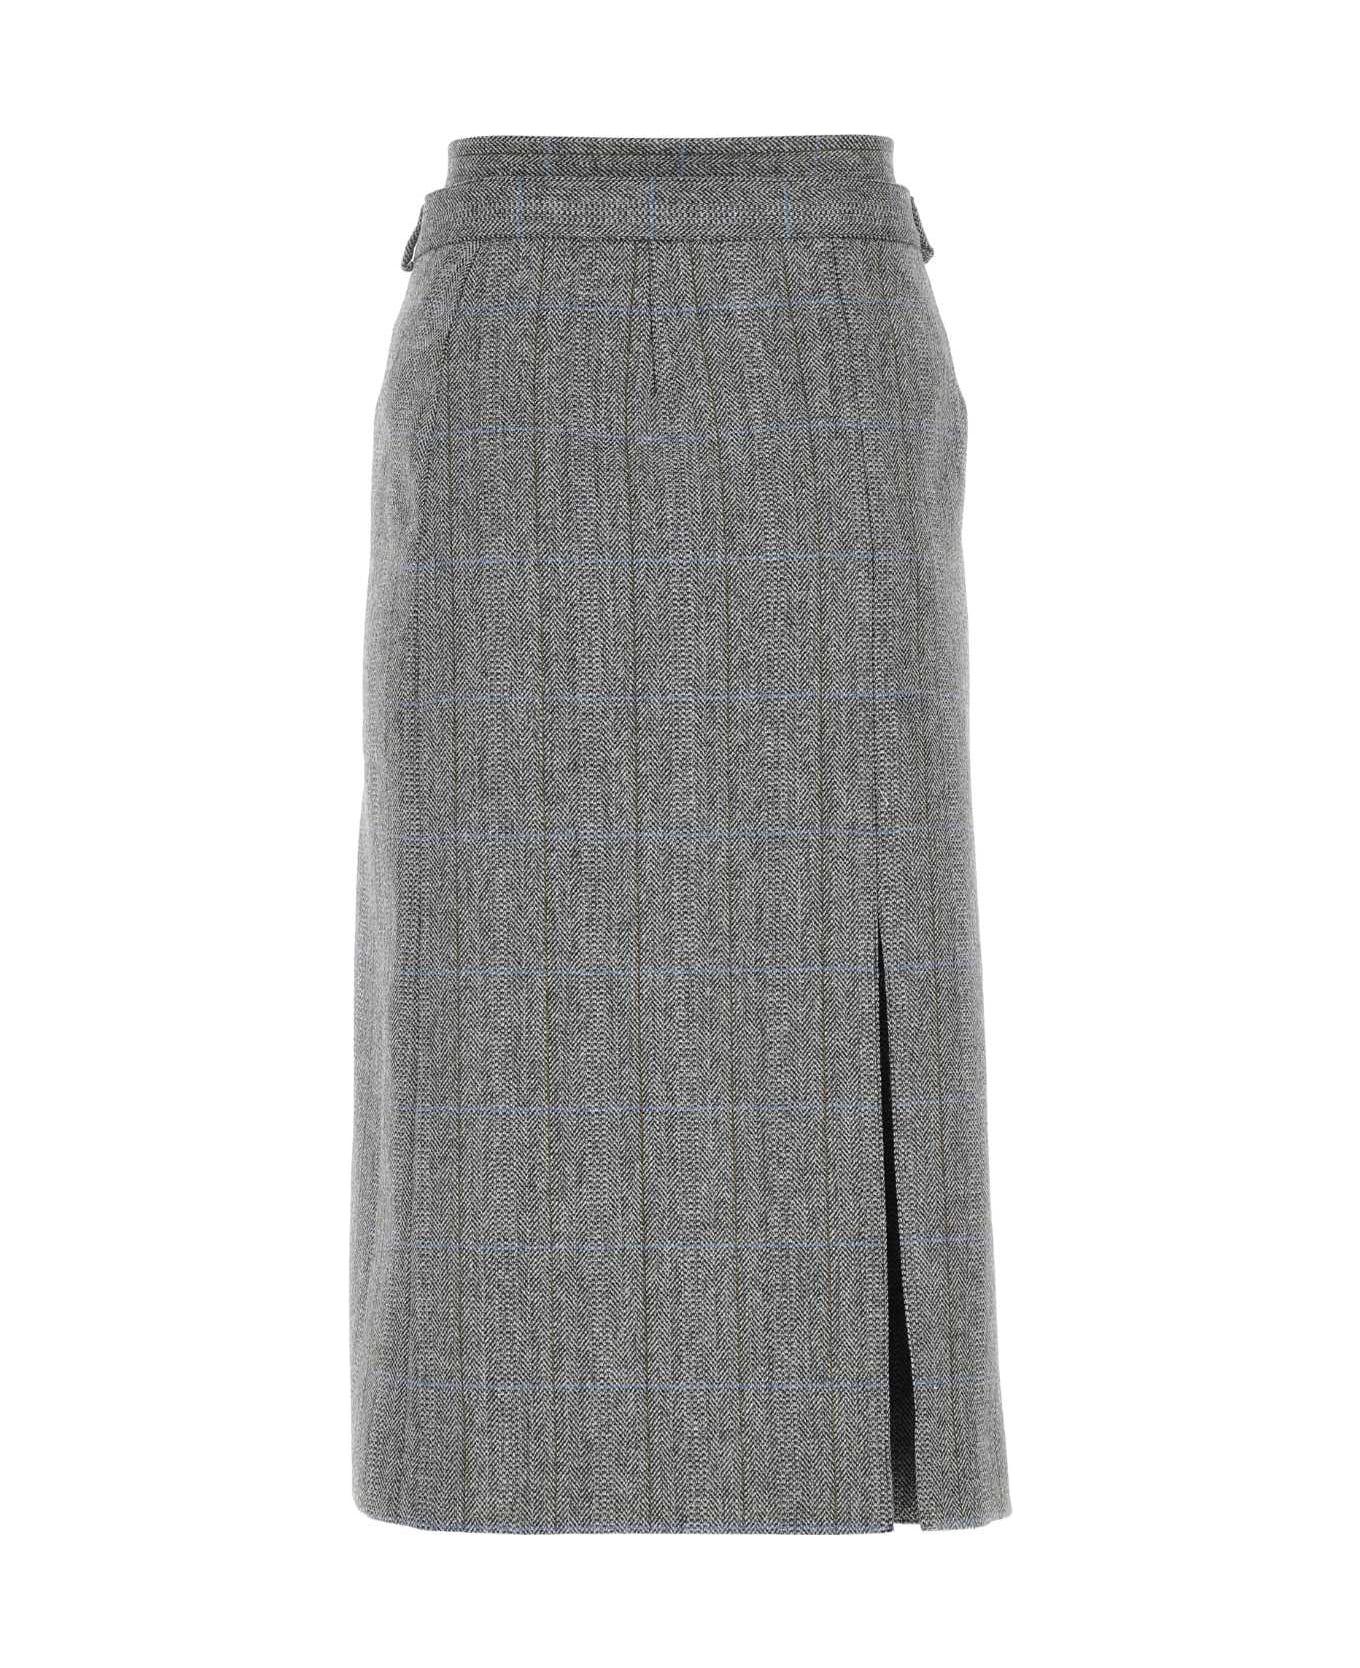 Maison Margiela Embroidered Wool Skirt - 001F スカート